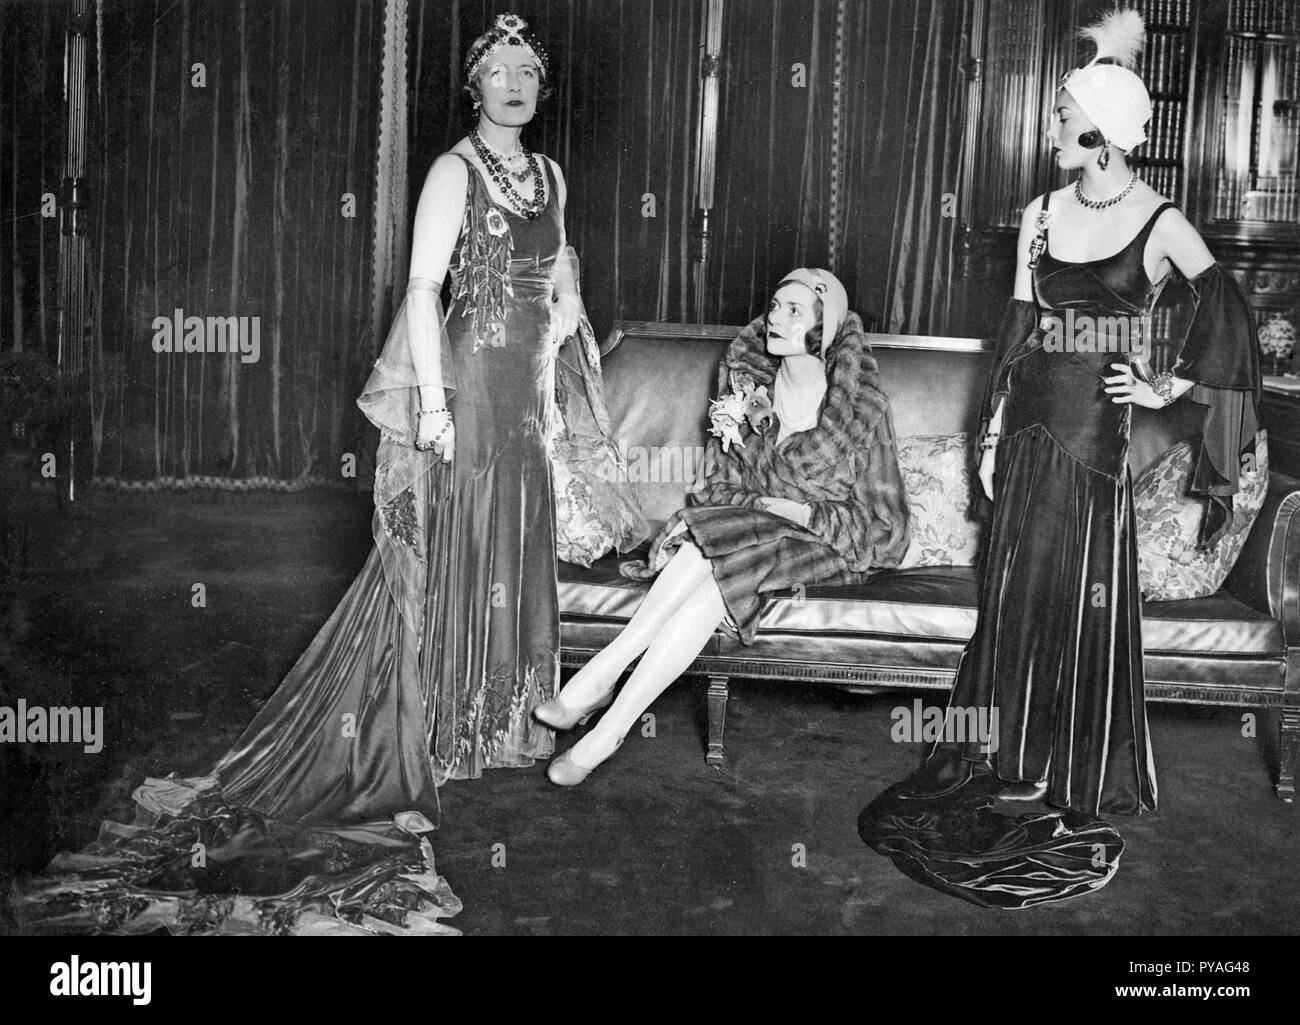 1930s 1940s Chanel Adaptation Silk Velvet Dress Small | New Fall